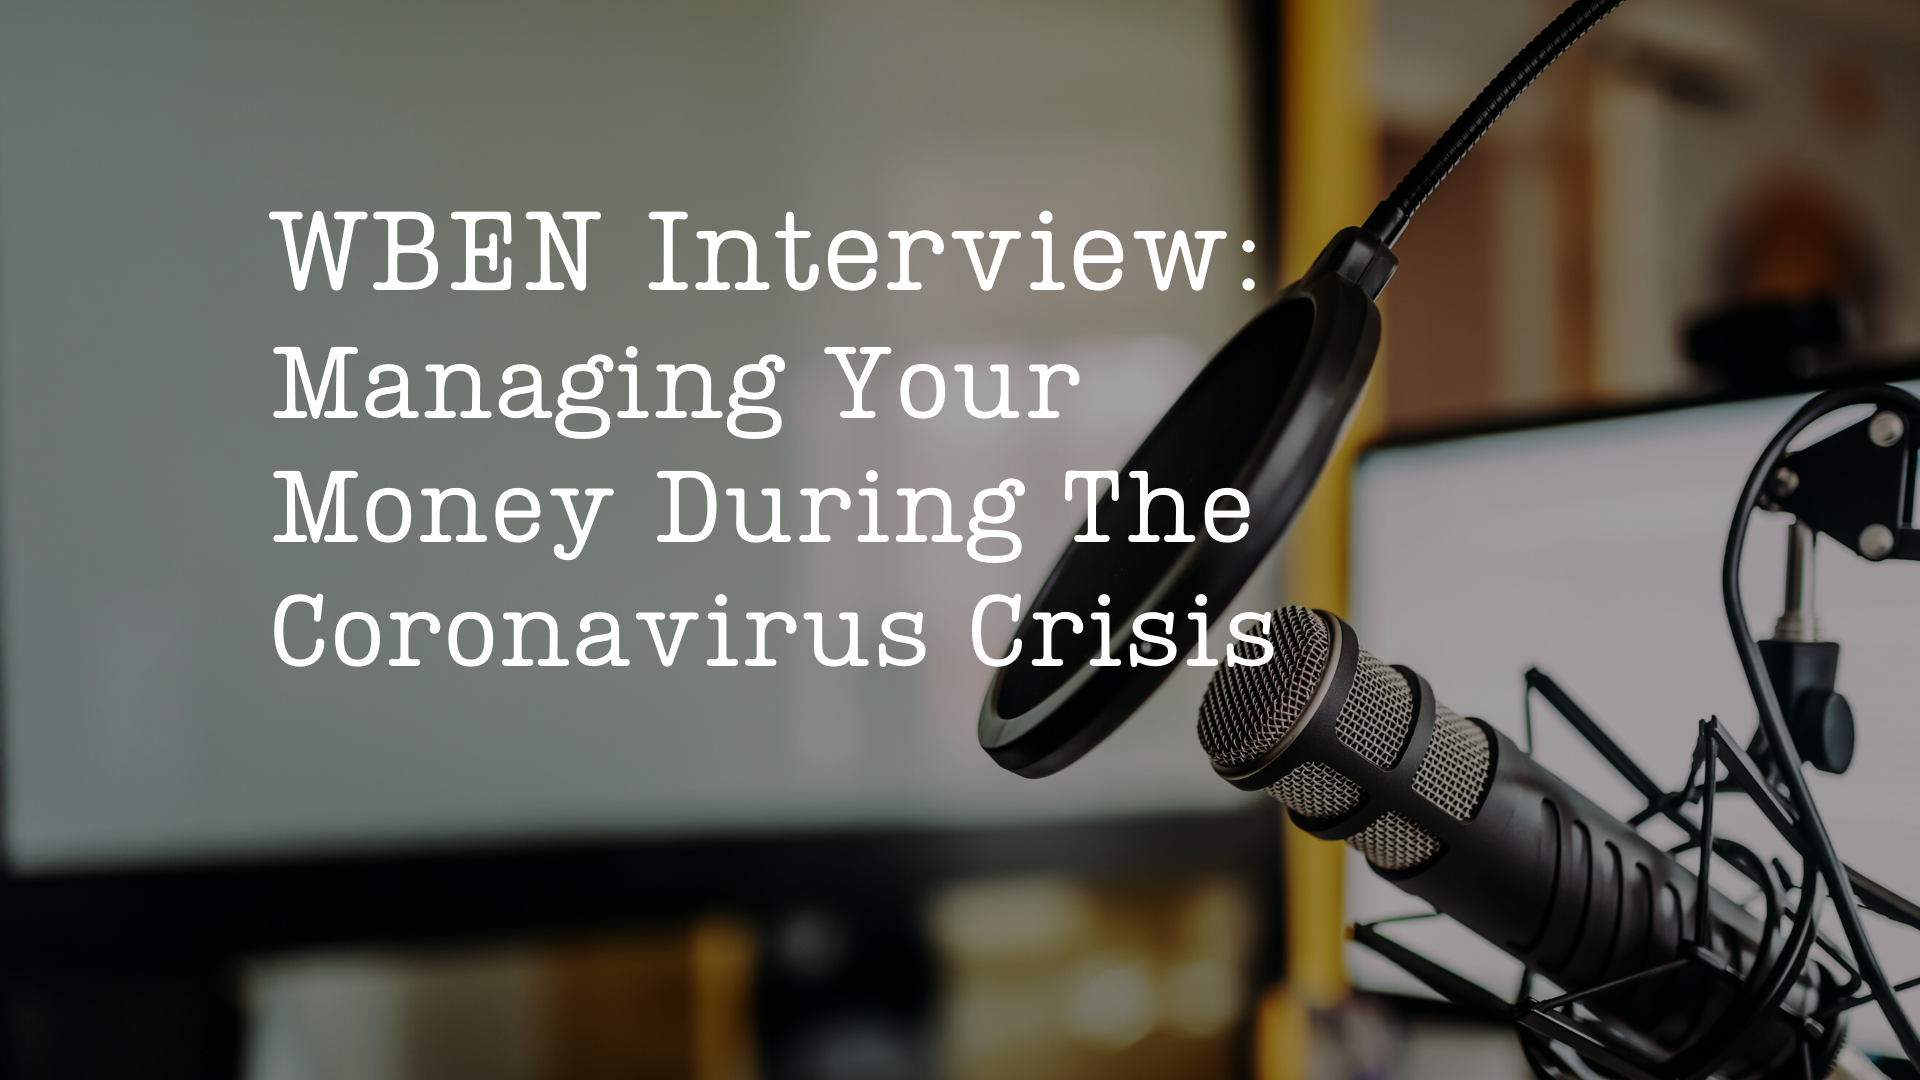 WBEN Interview: Managing Your Money During The Coronavirus Crisis